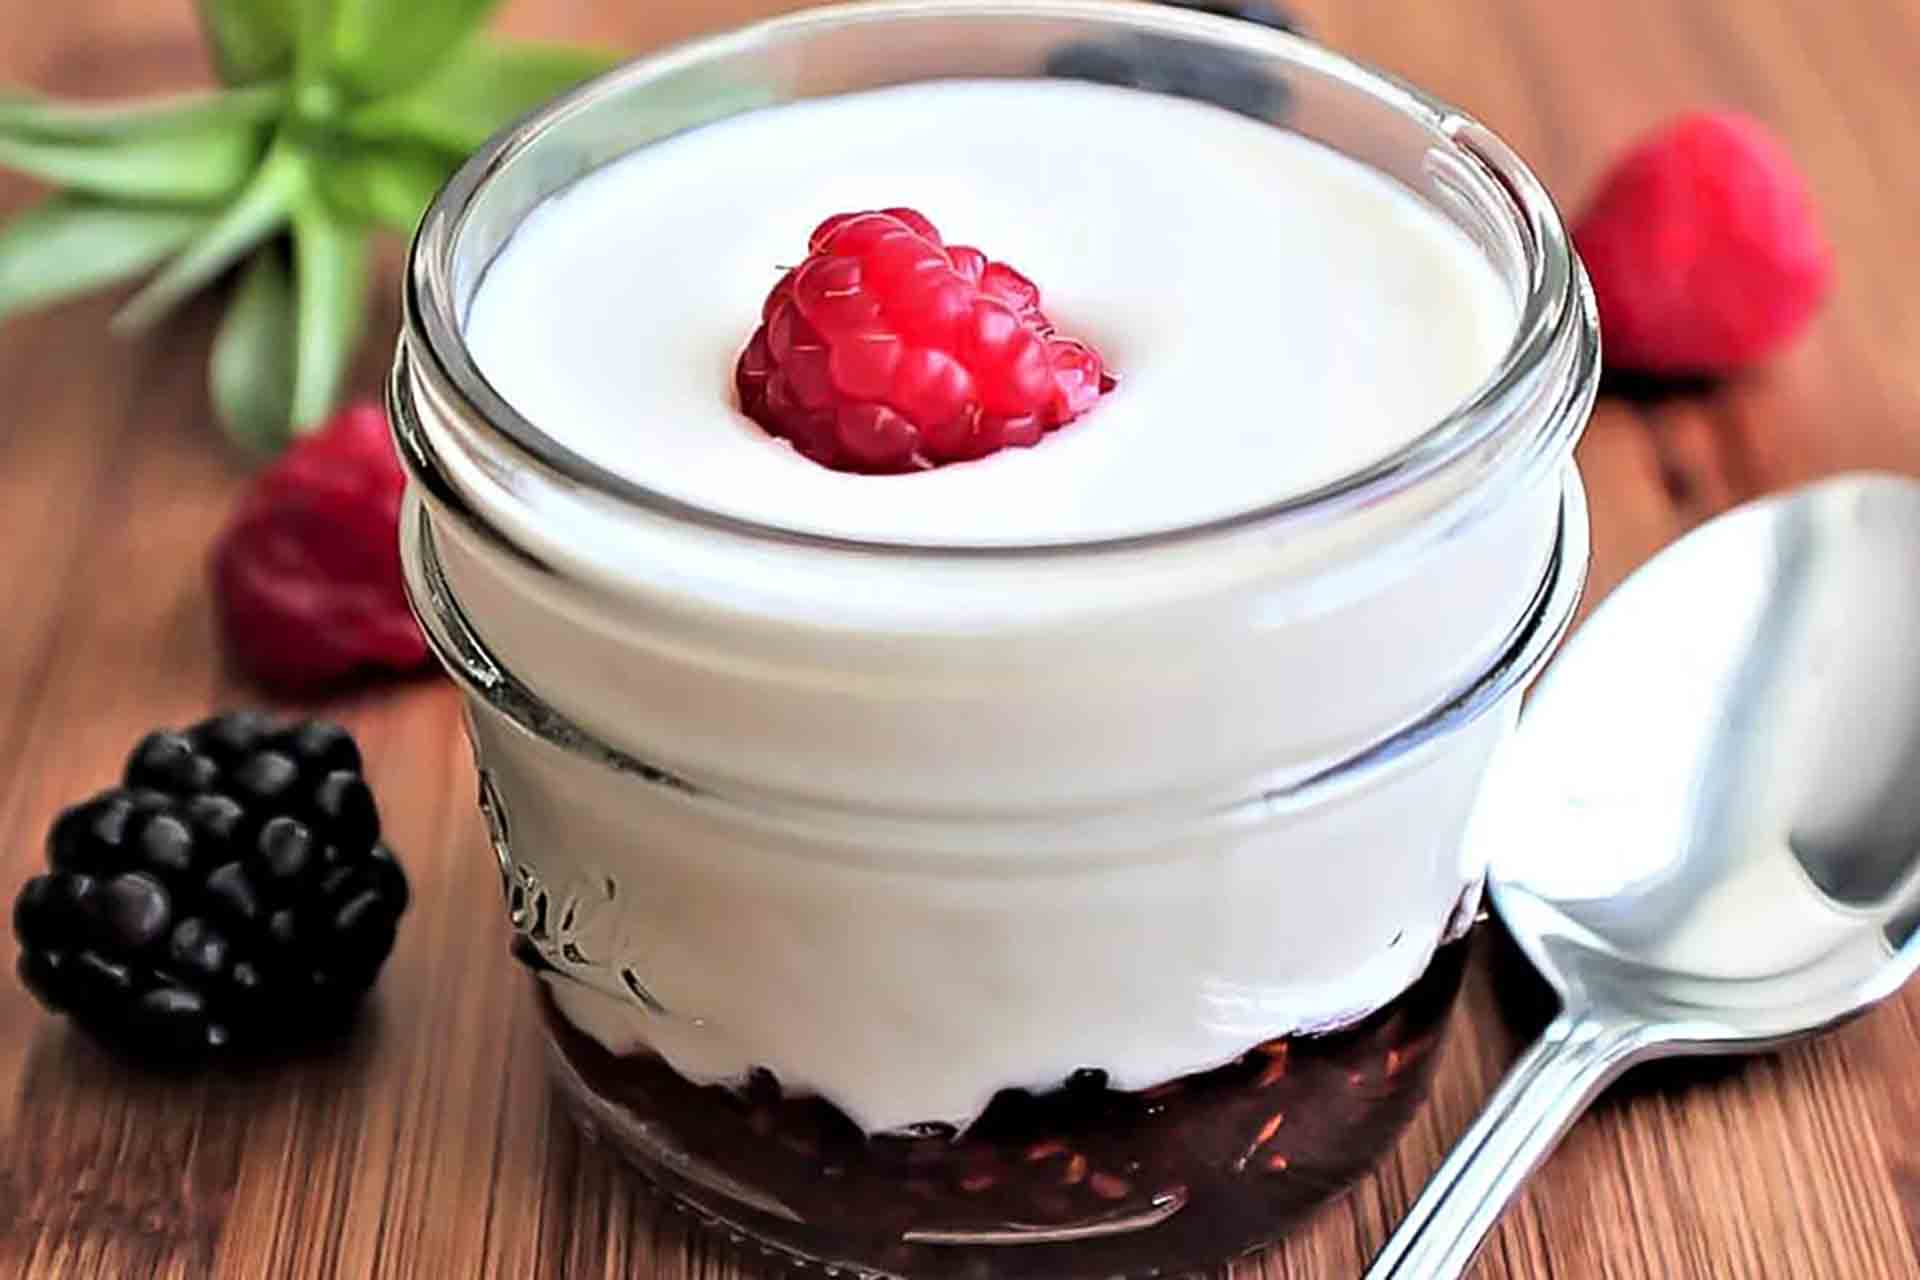 A glass jar of yogurt topped with a raspberry